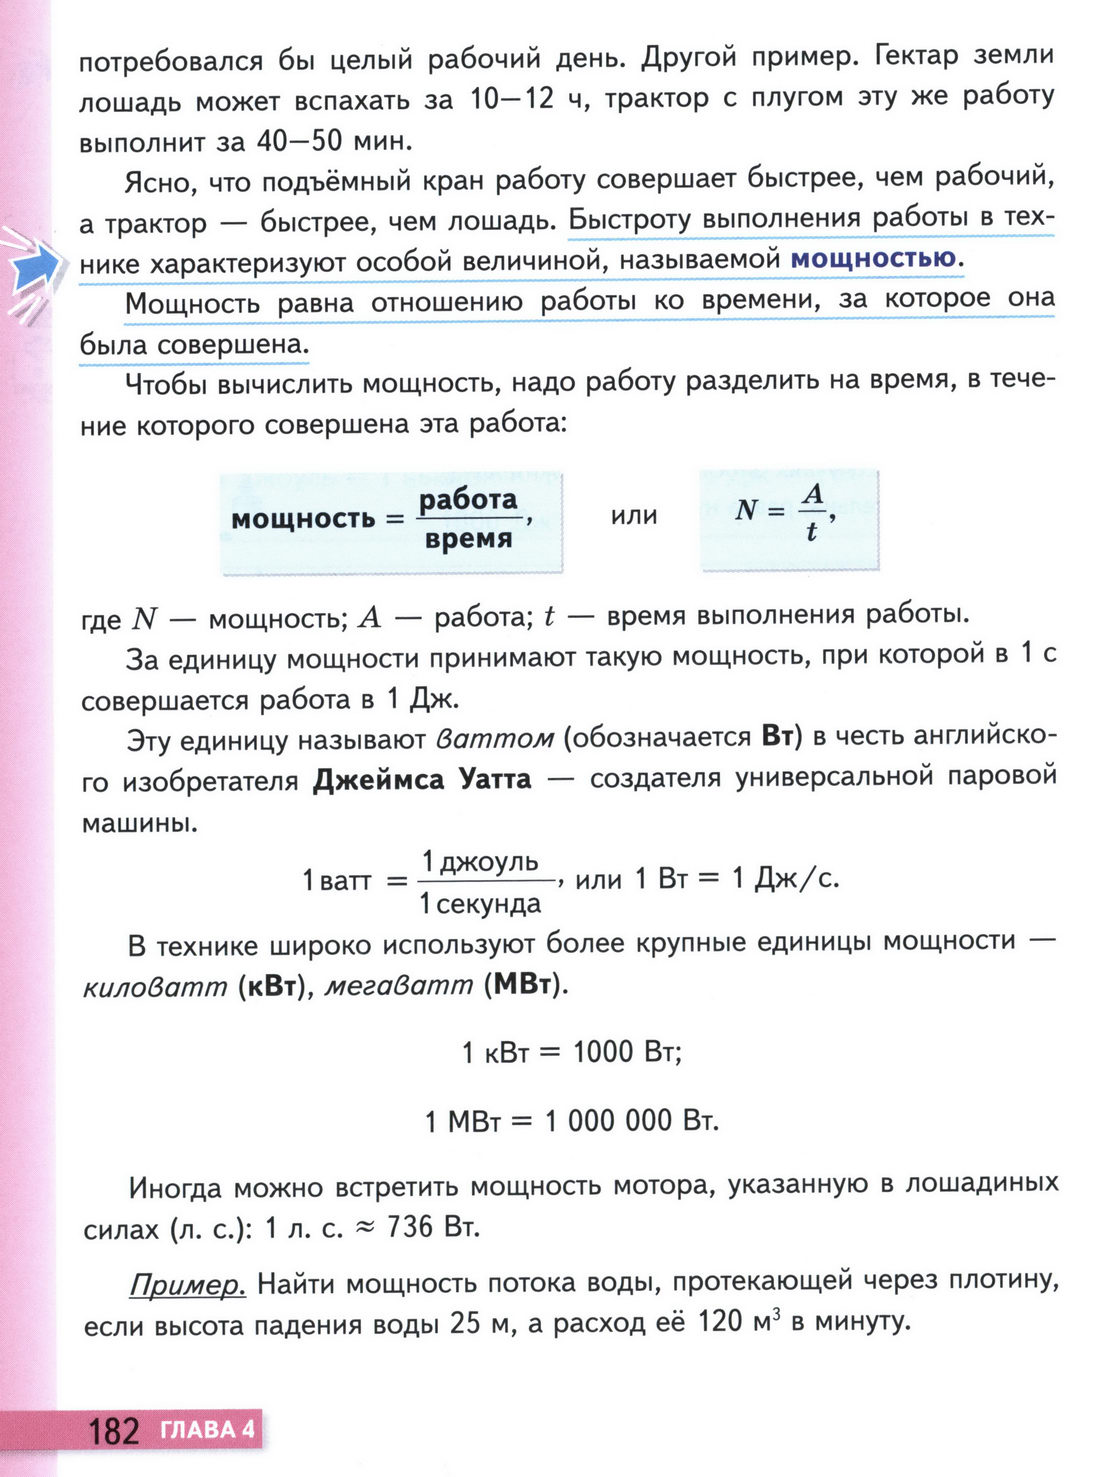 стр 182 учебник физики 7 класс параграф 56